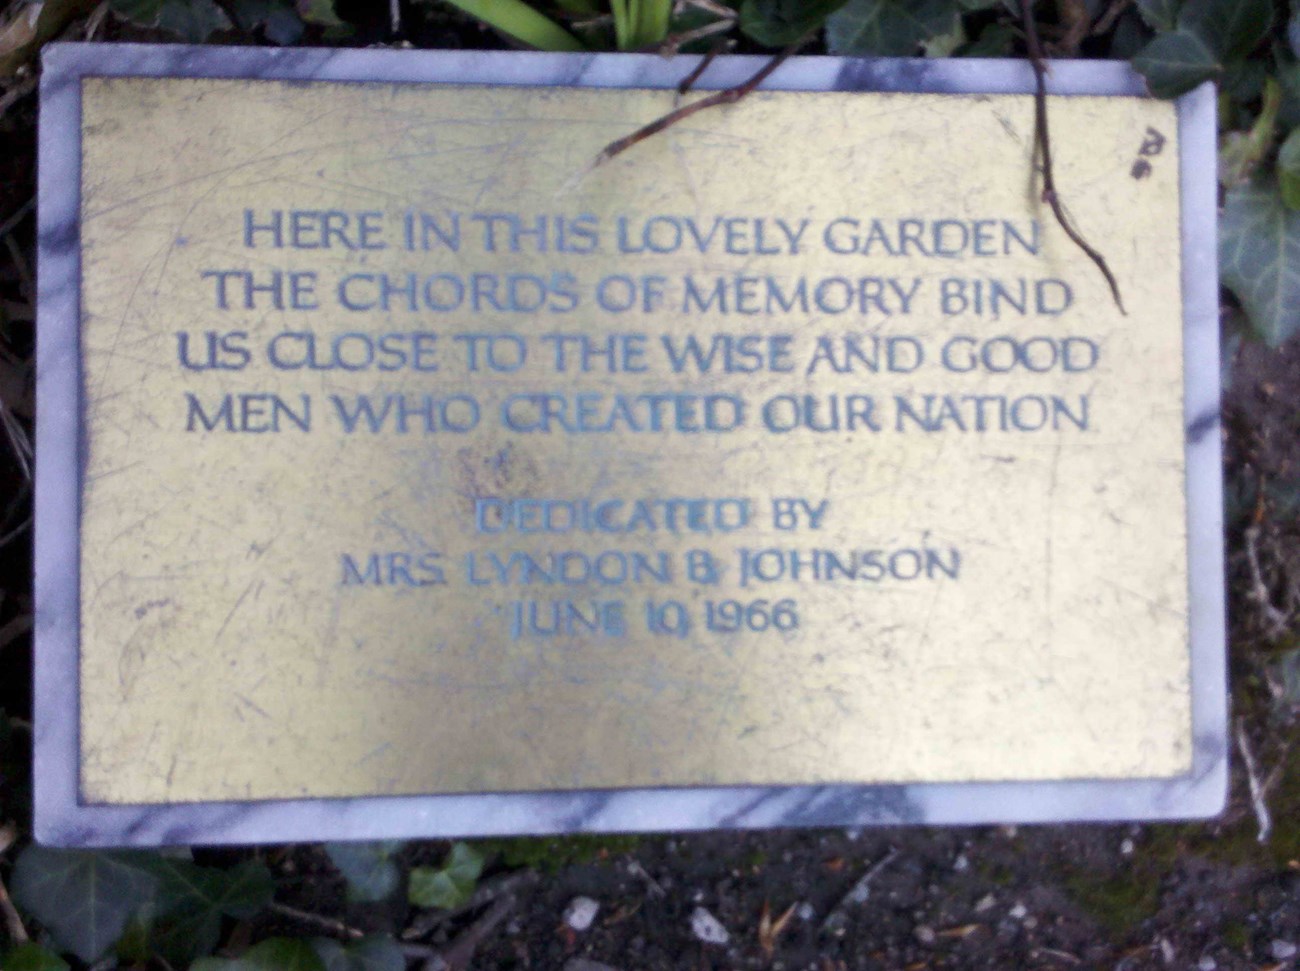 18th century garden plaque